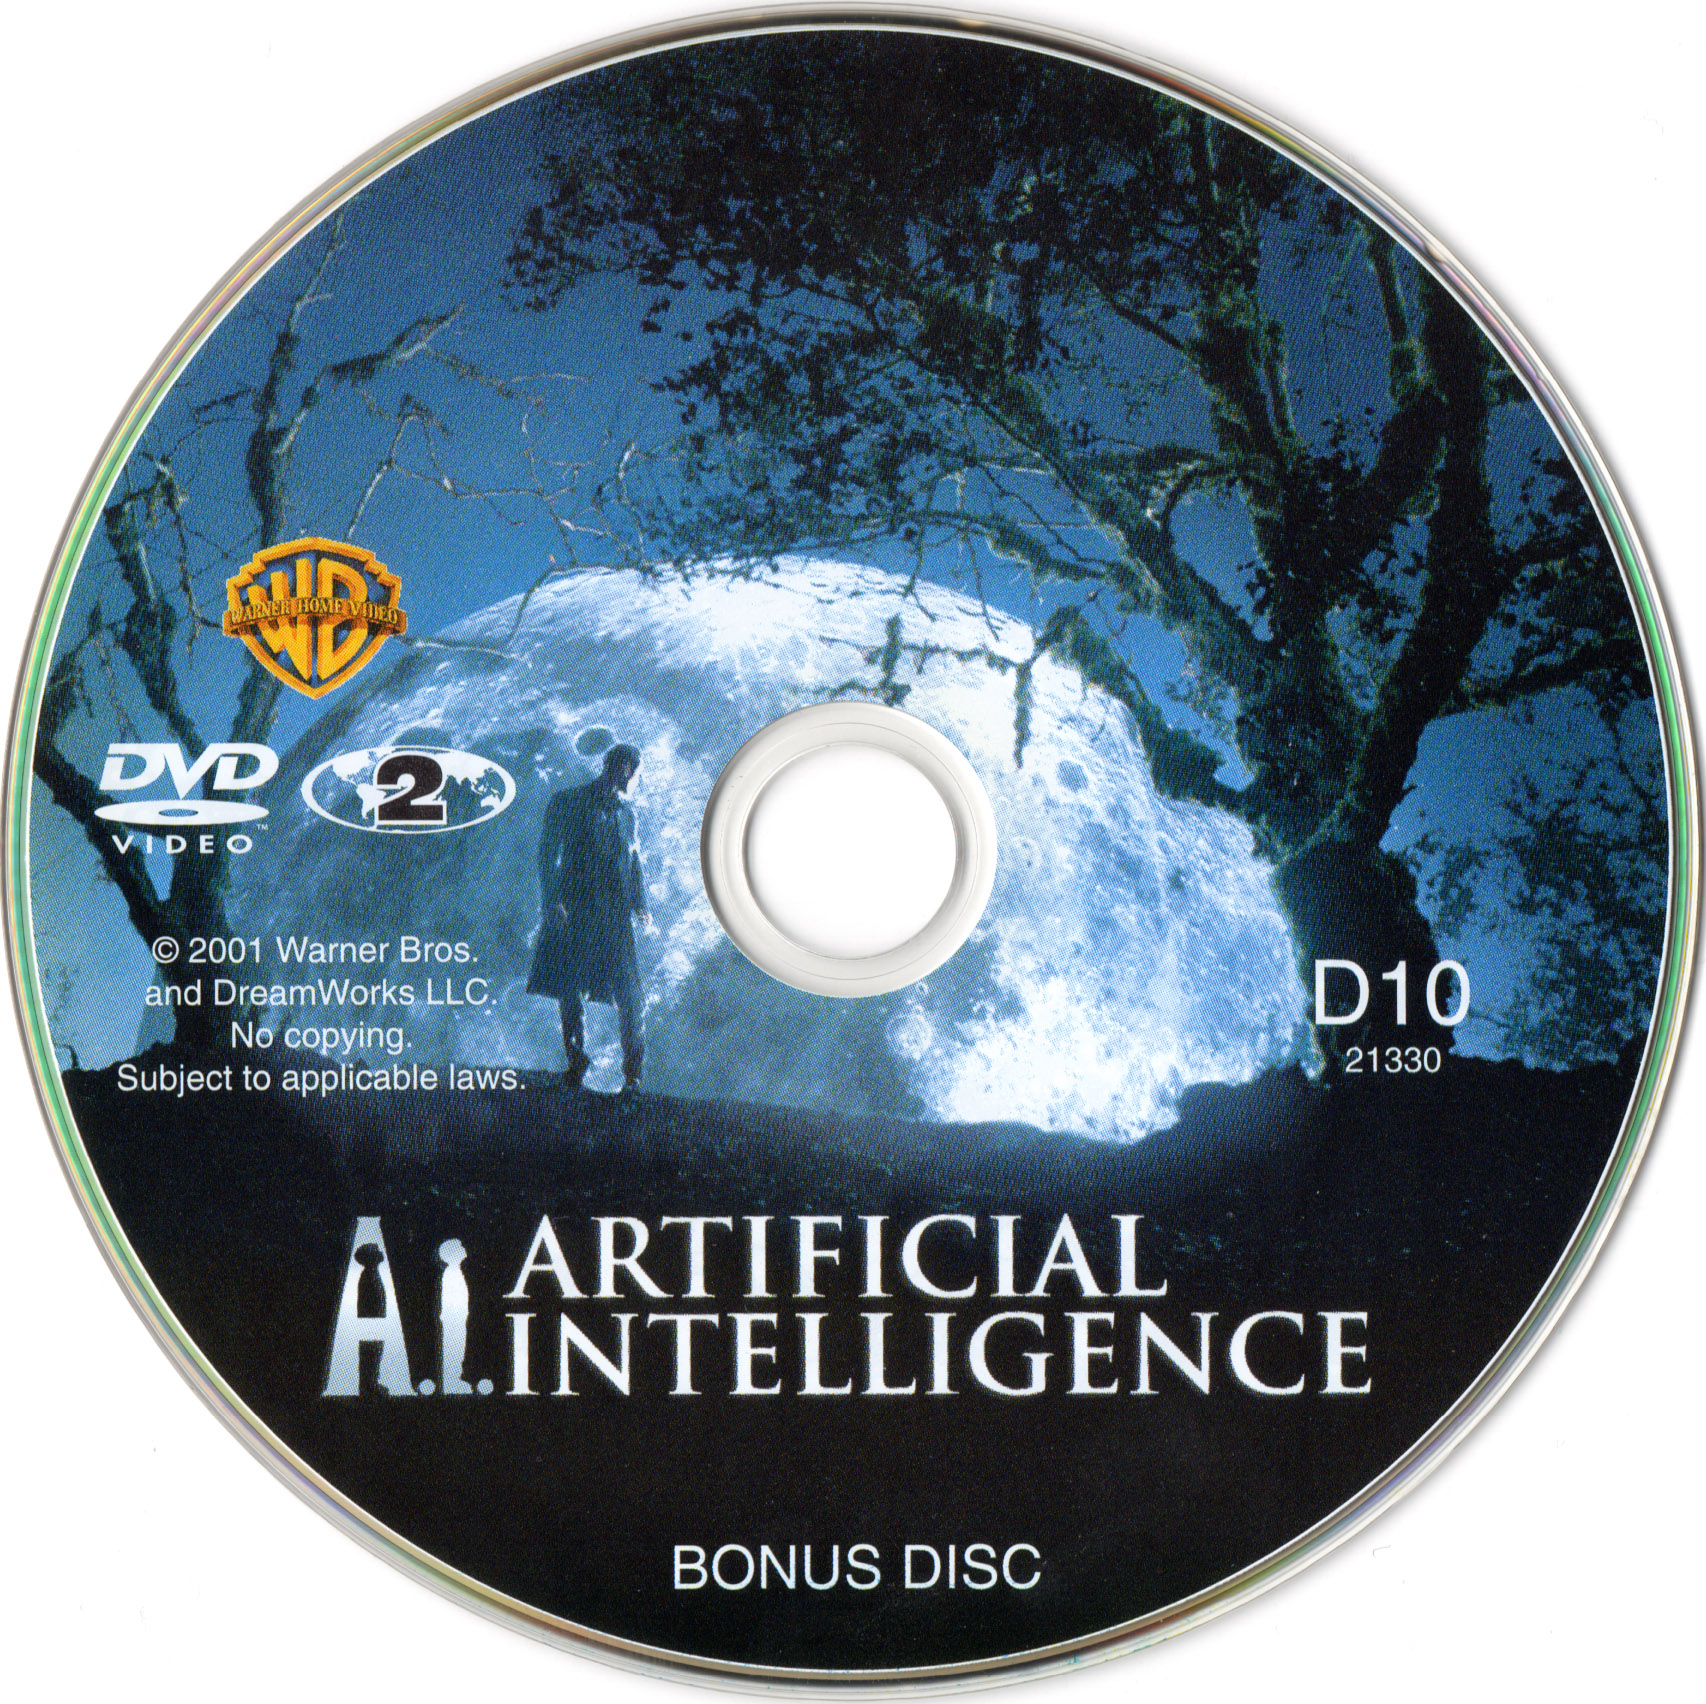 AI Intelligence Artificielle DISC 2